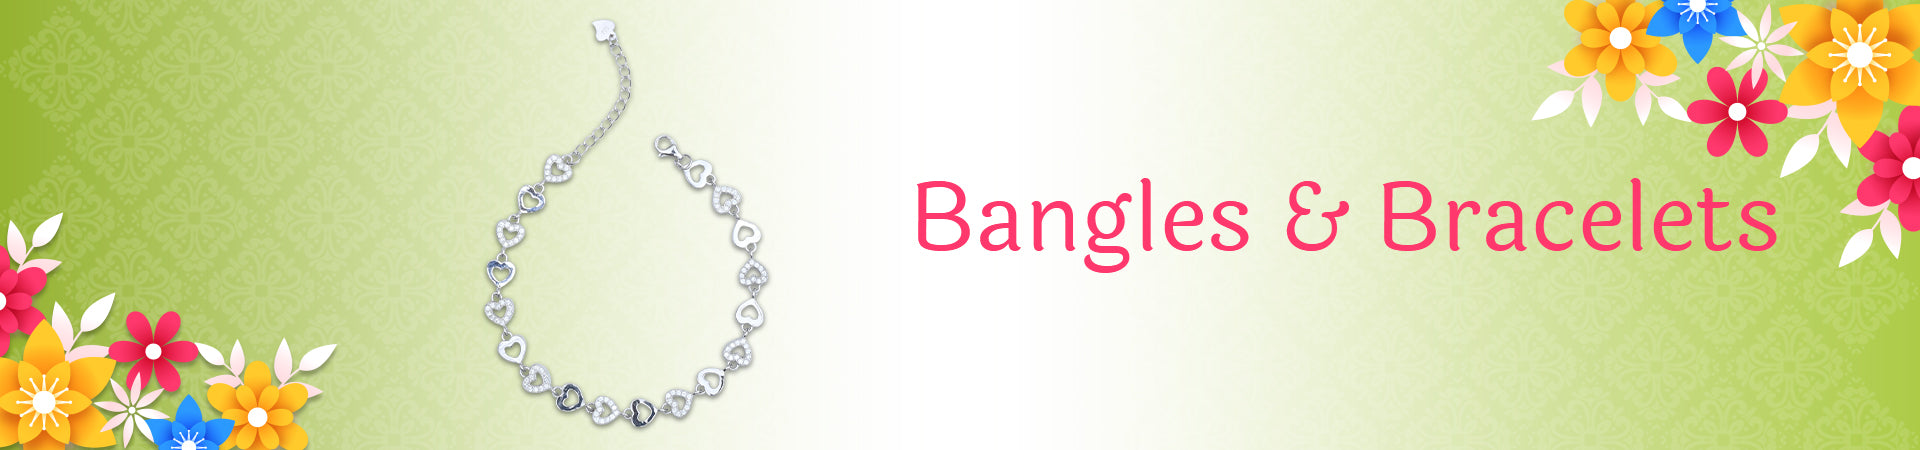 Silver Bangles and Bracelets